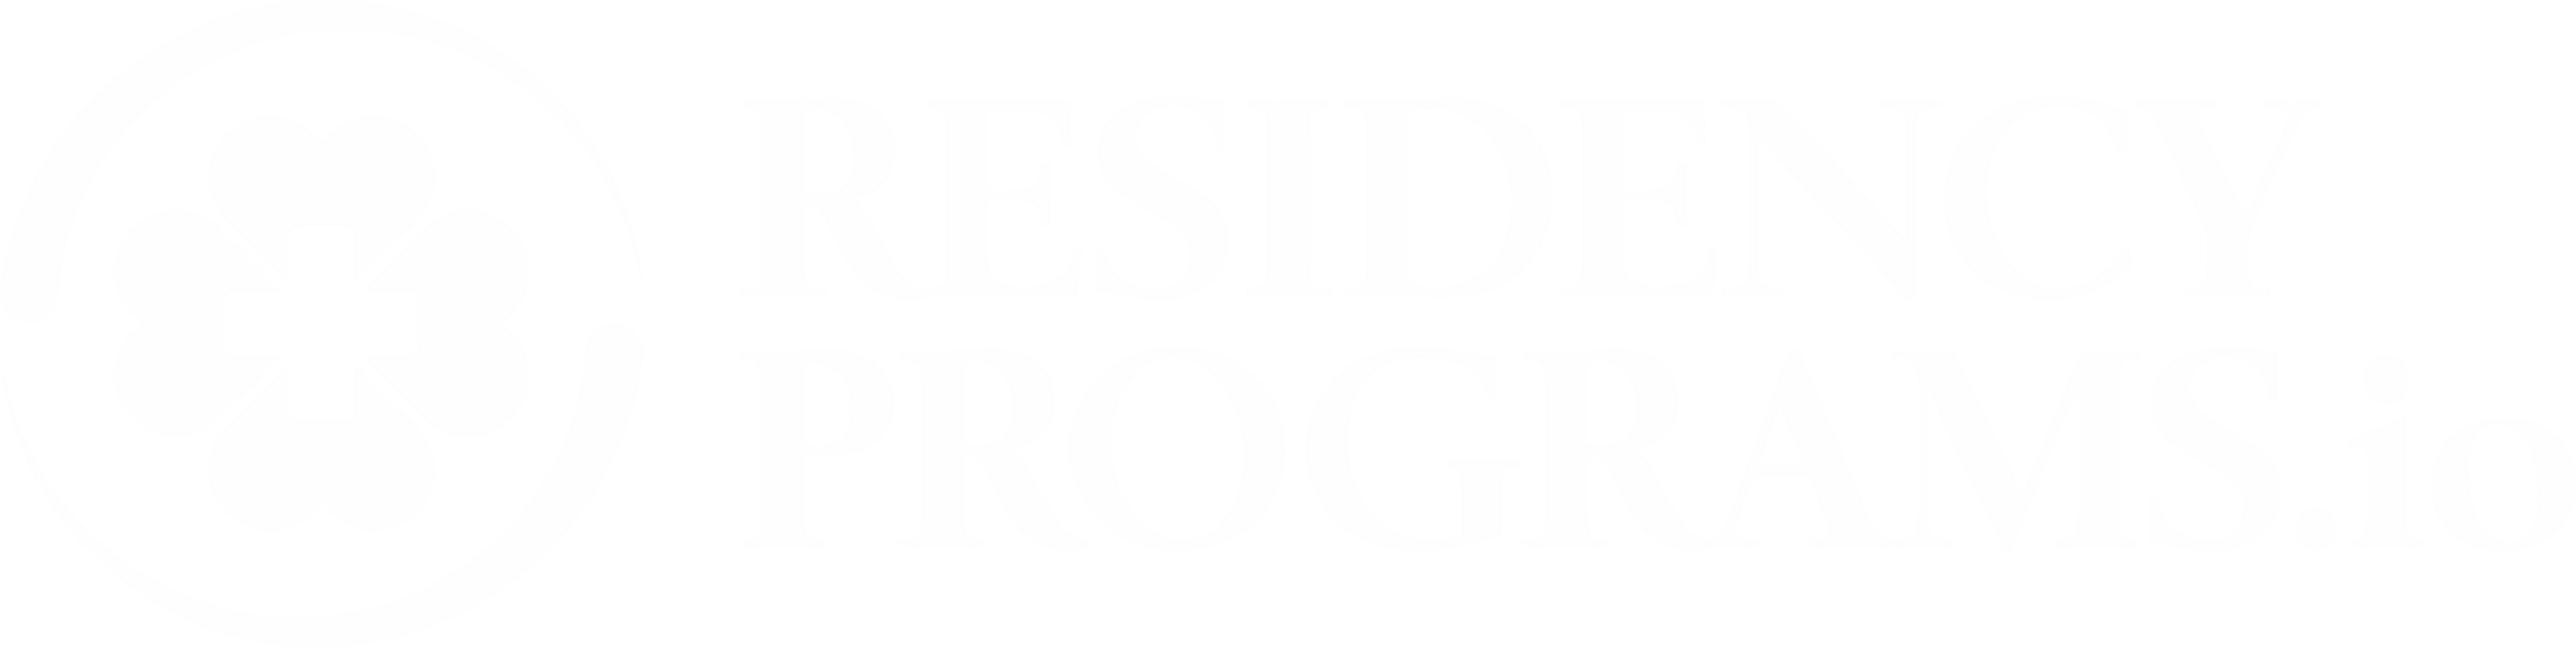 ResidencyPrograms.io Footer Logo